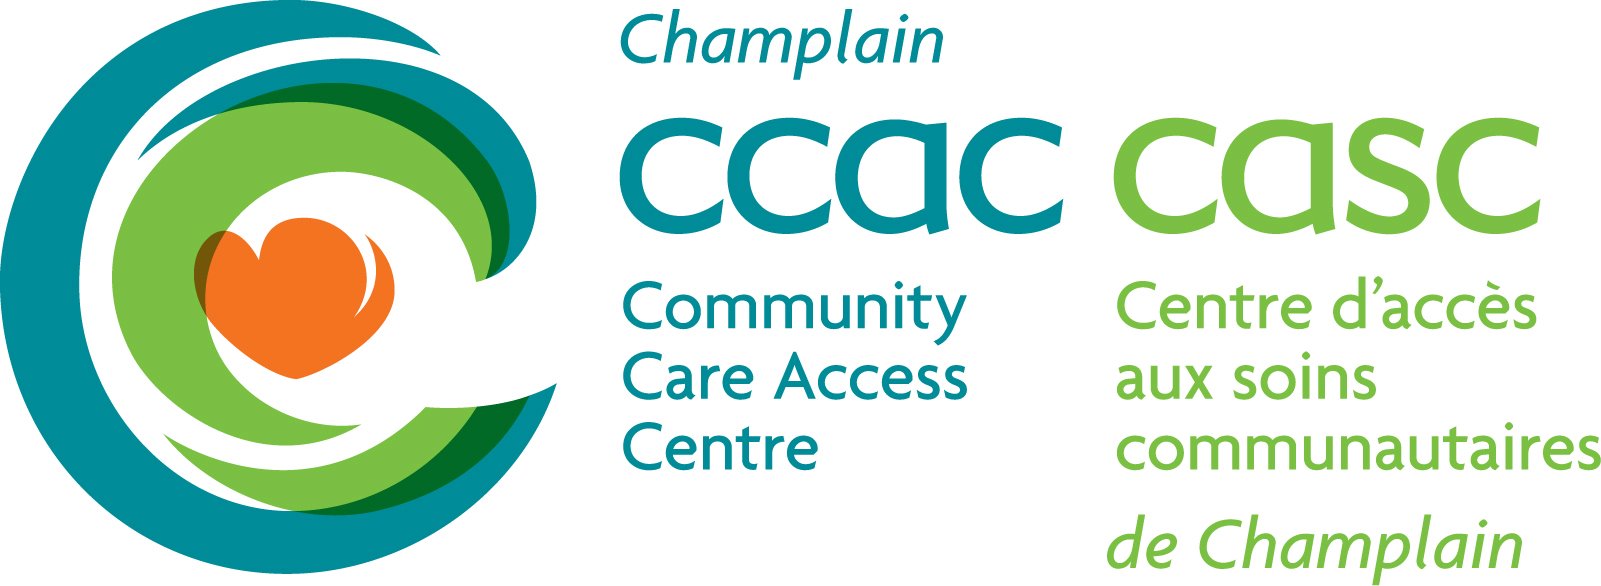 Champlain Community Care Access Centre